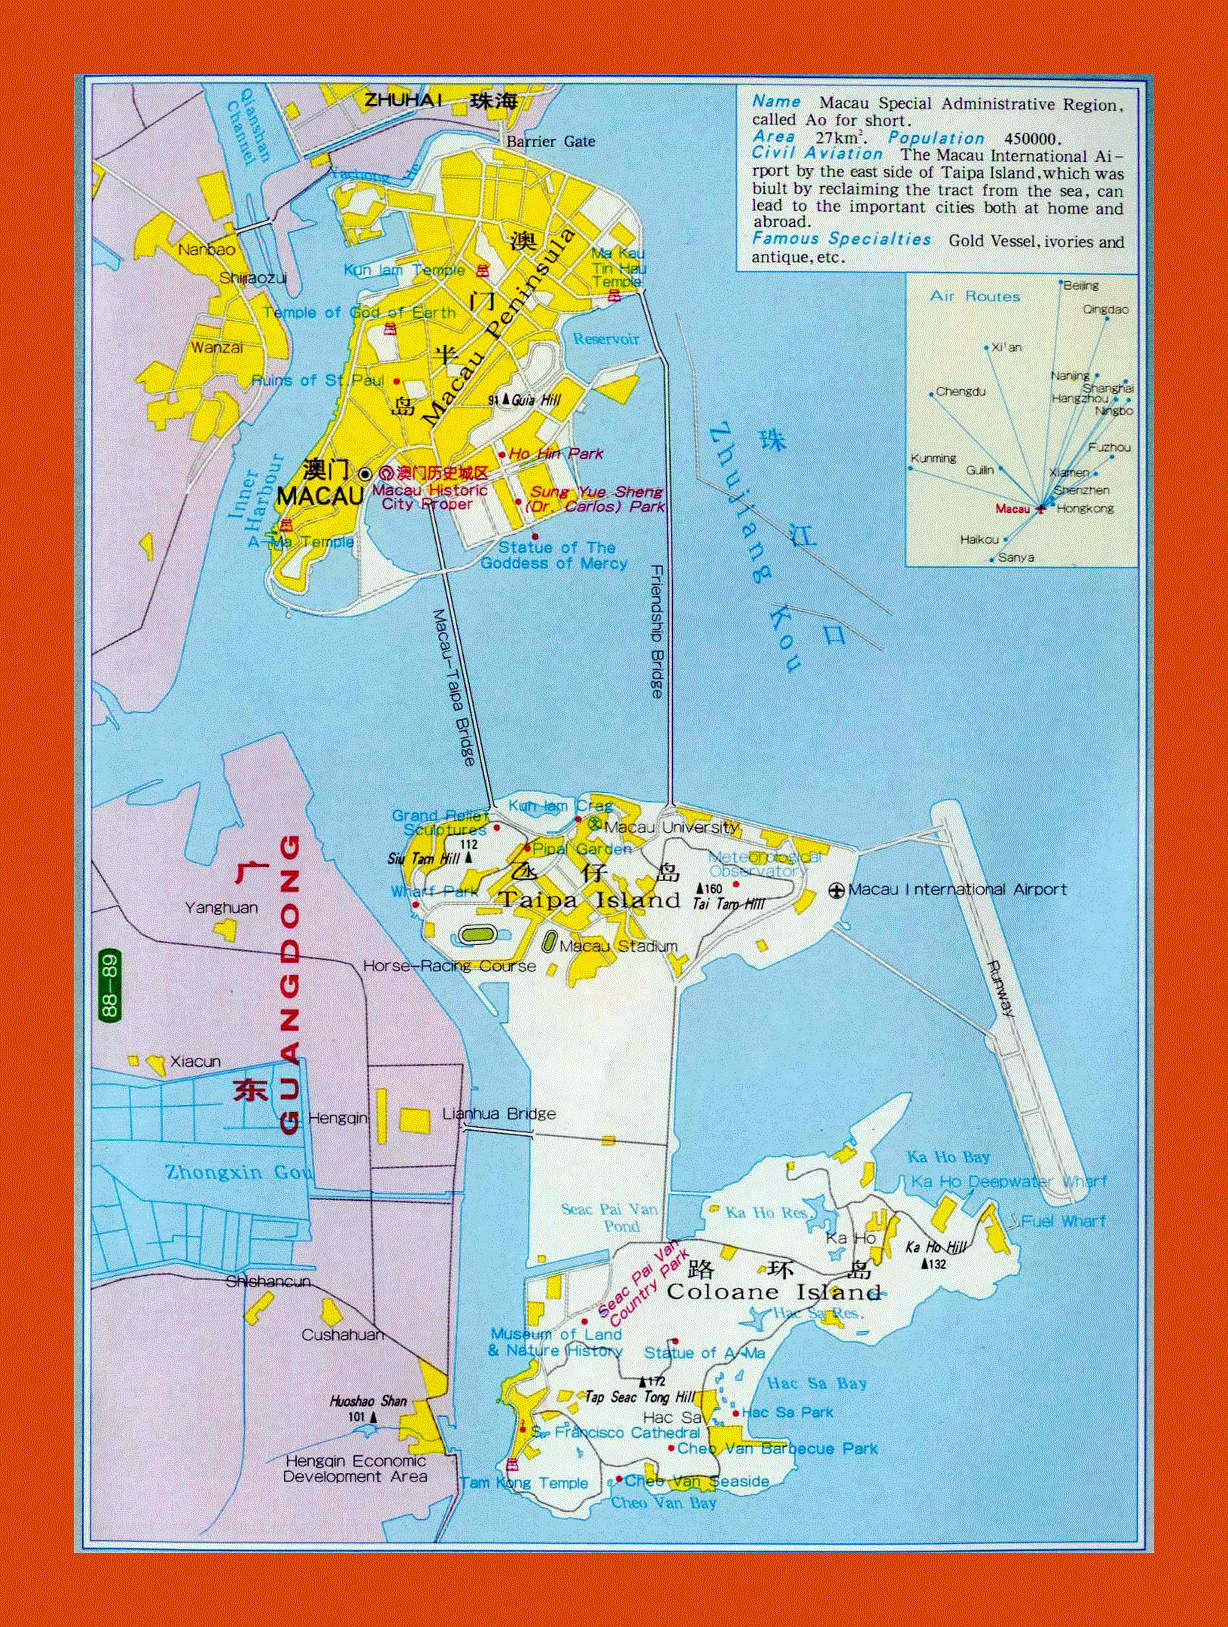 Road map of Macau